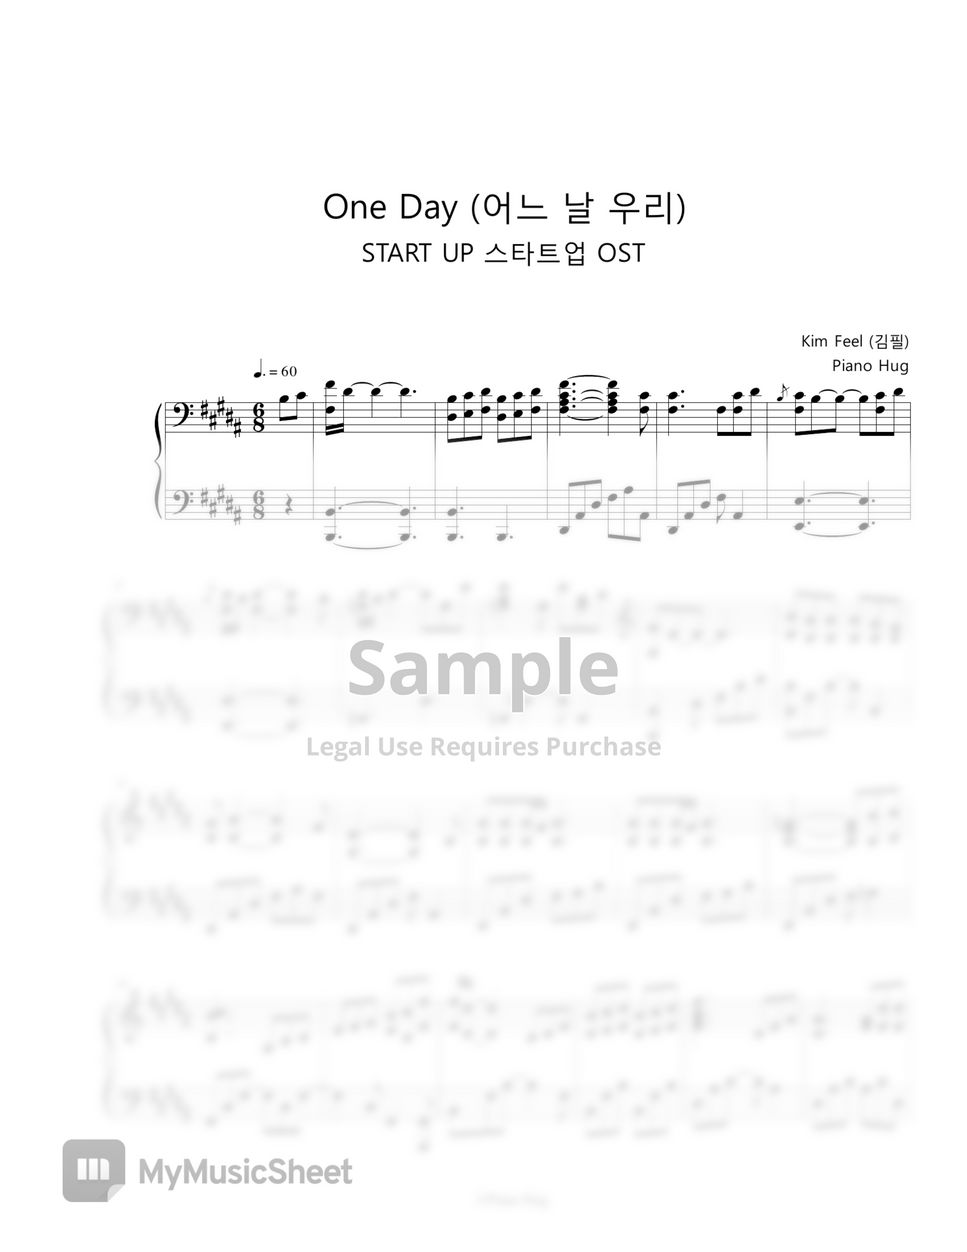 Kim Feel (김필) - One Day '어느 날 우리' START UP 스타트업 OST by Piano Hug